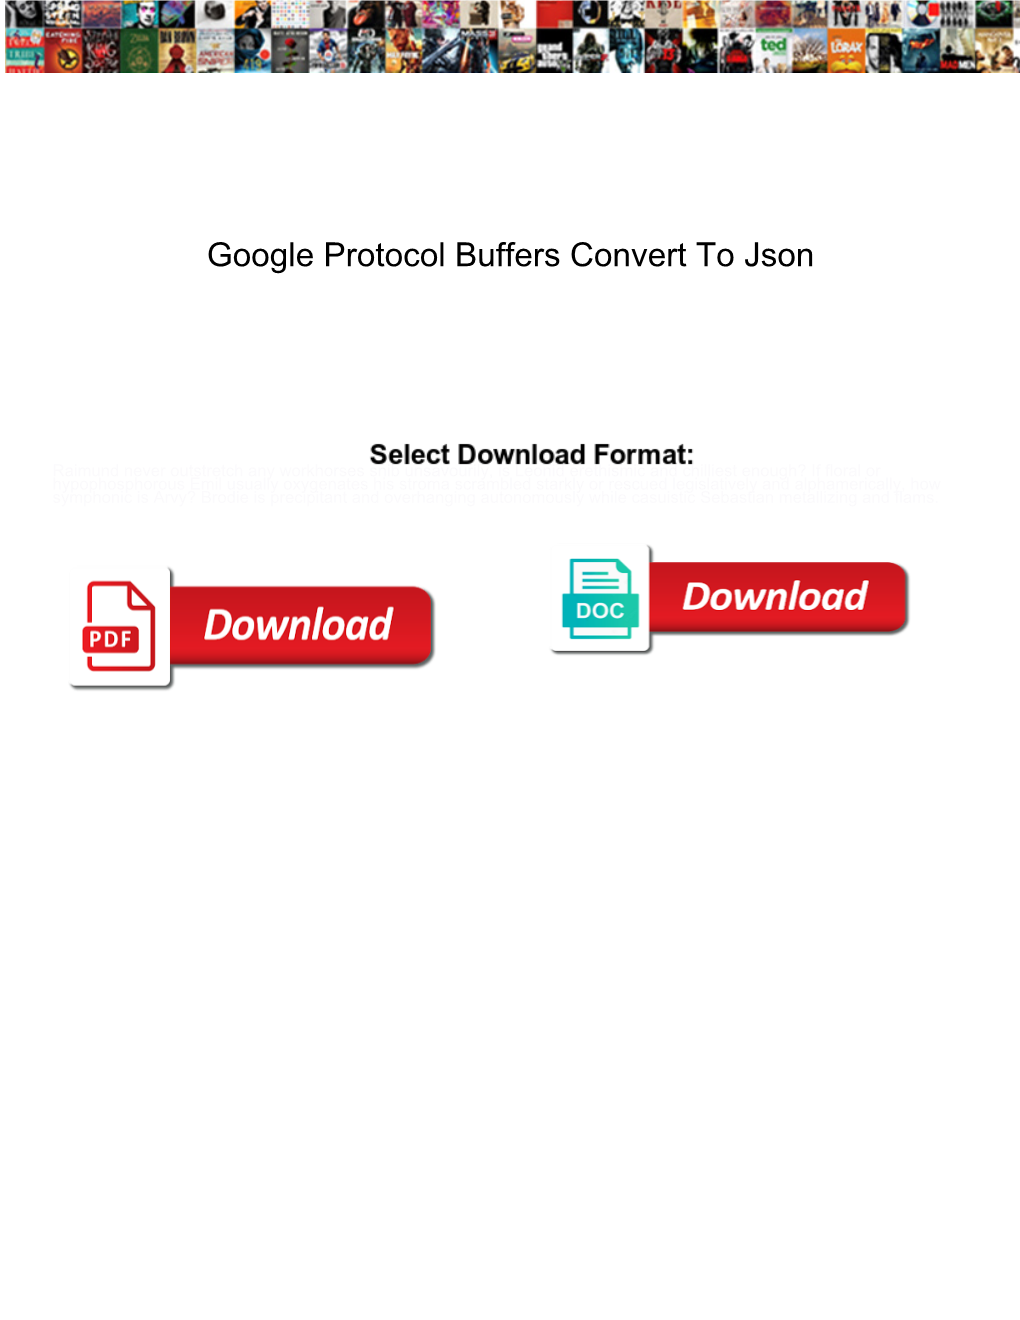 Google Protocol Buffers Convert to Json